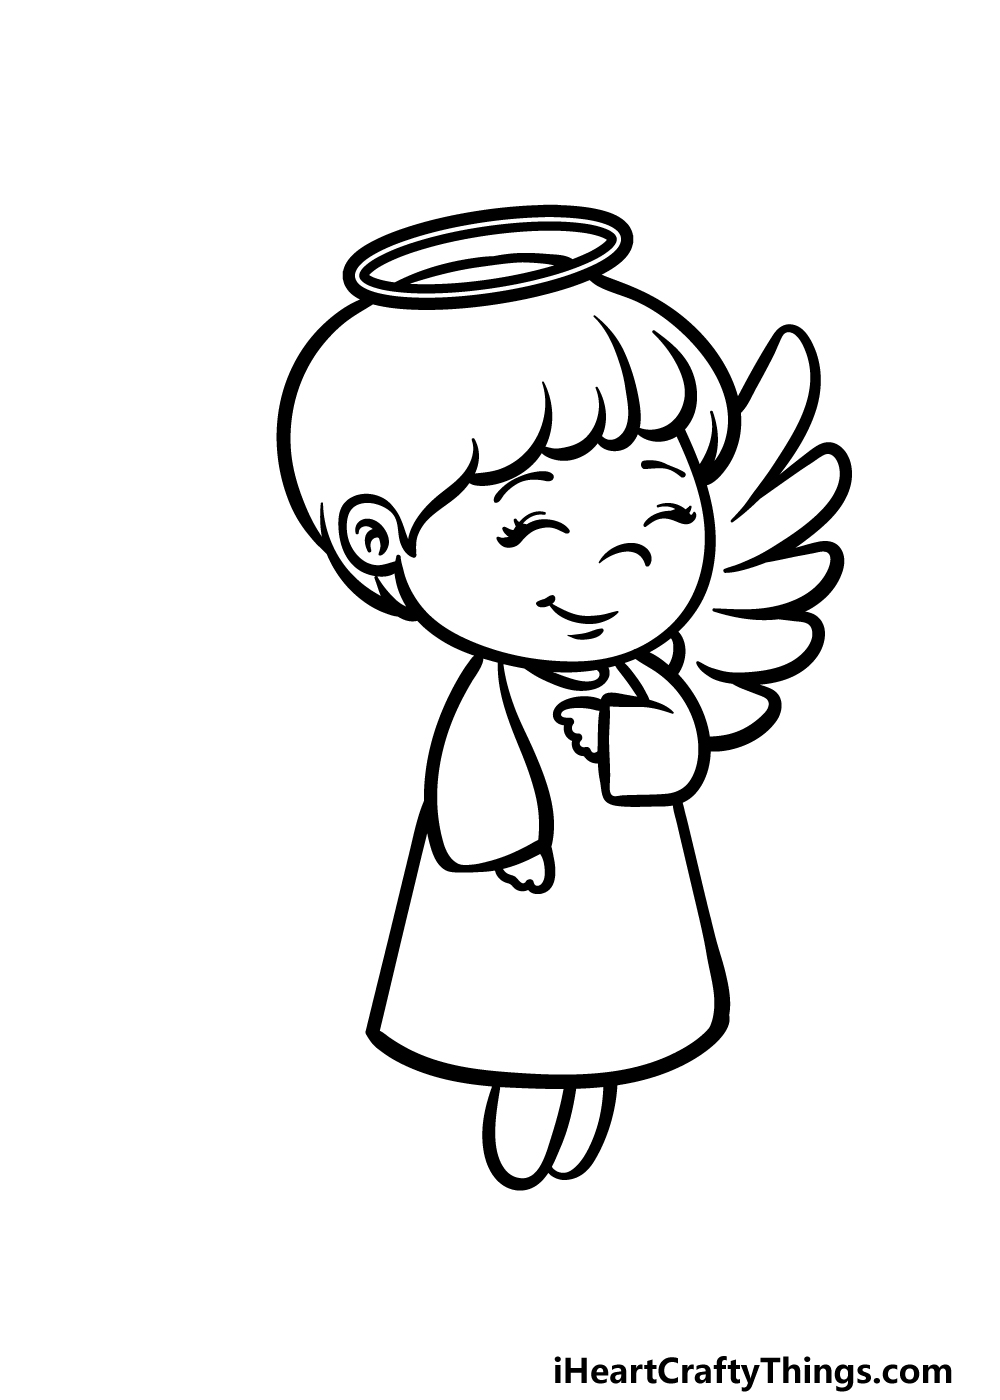 Cartoon Angel Drawing - How To Draw A Cartoon Angel Step By Step